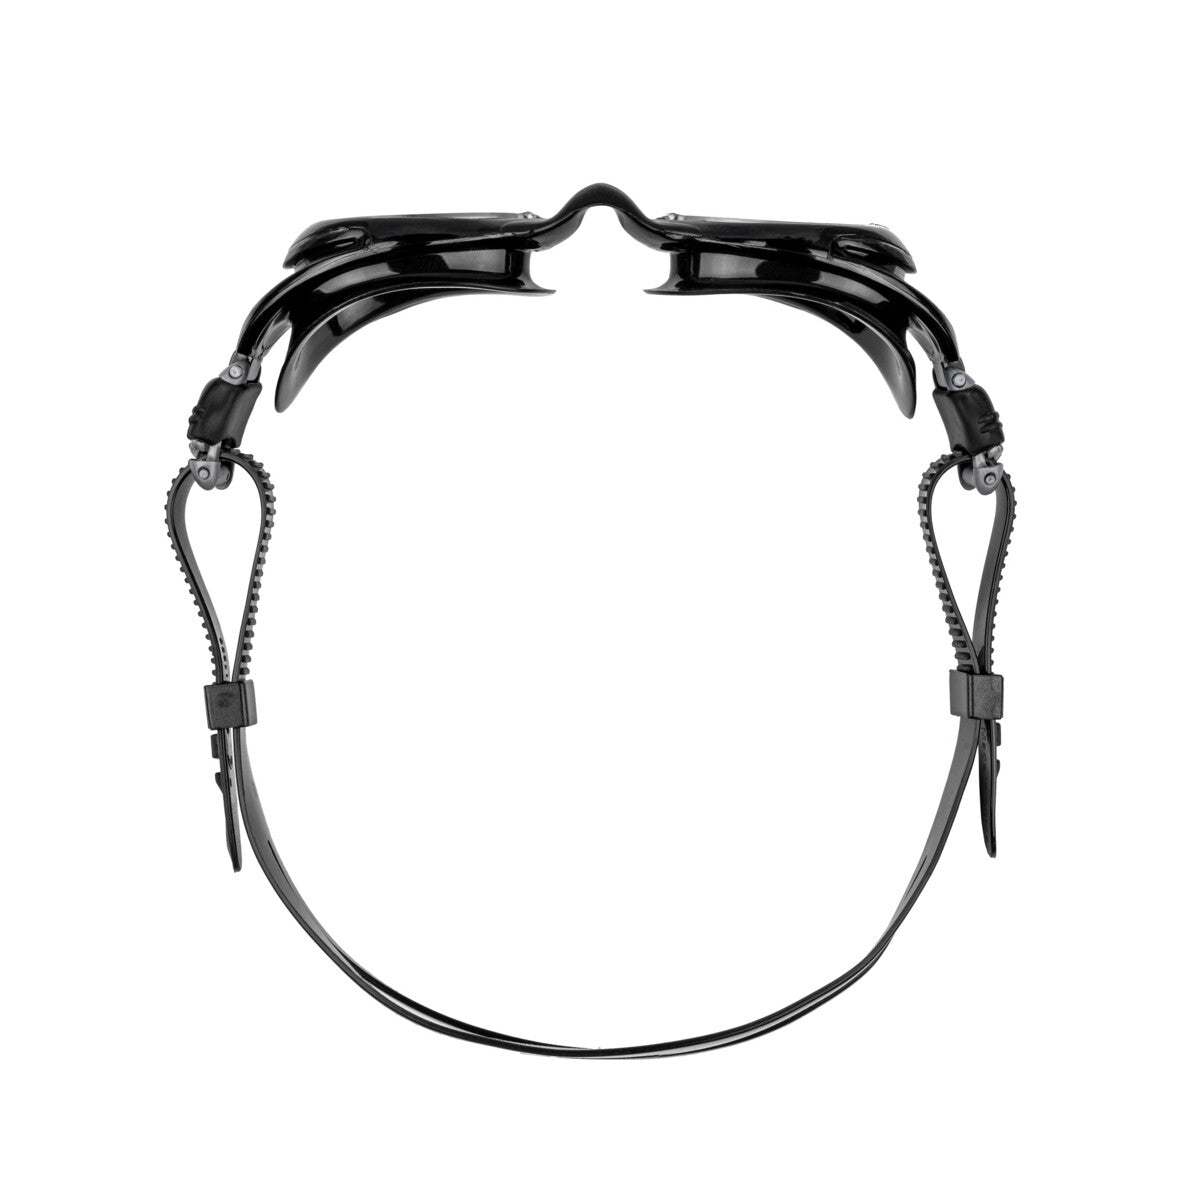 ZOGGS Vision Optical Corrective Goggle משקפת שחייה בצבע שחור עם עדשות אופטיות שקופה